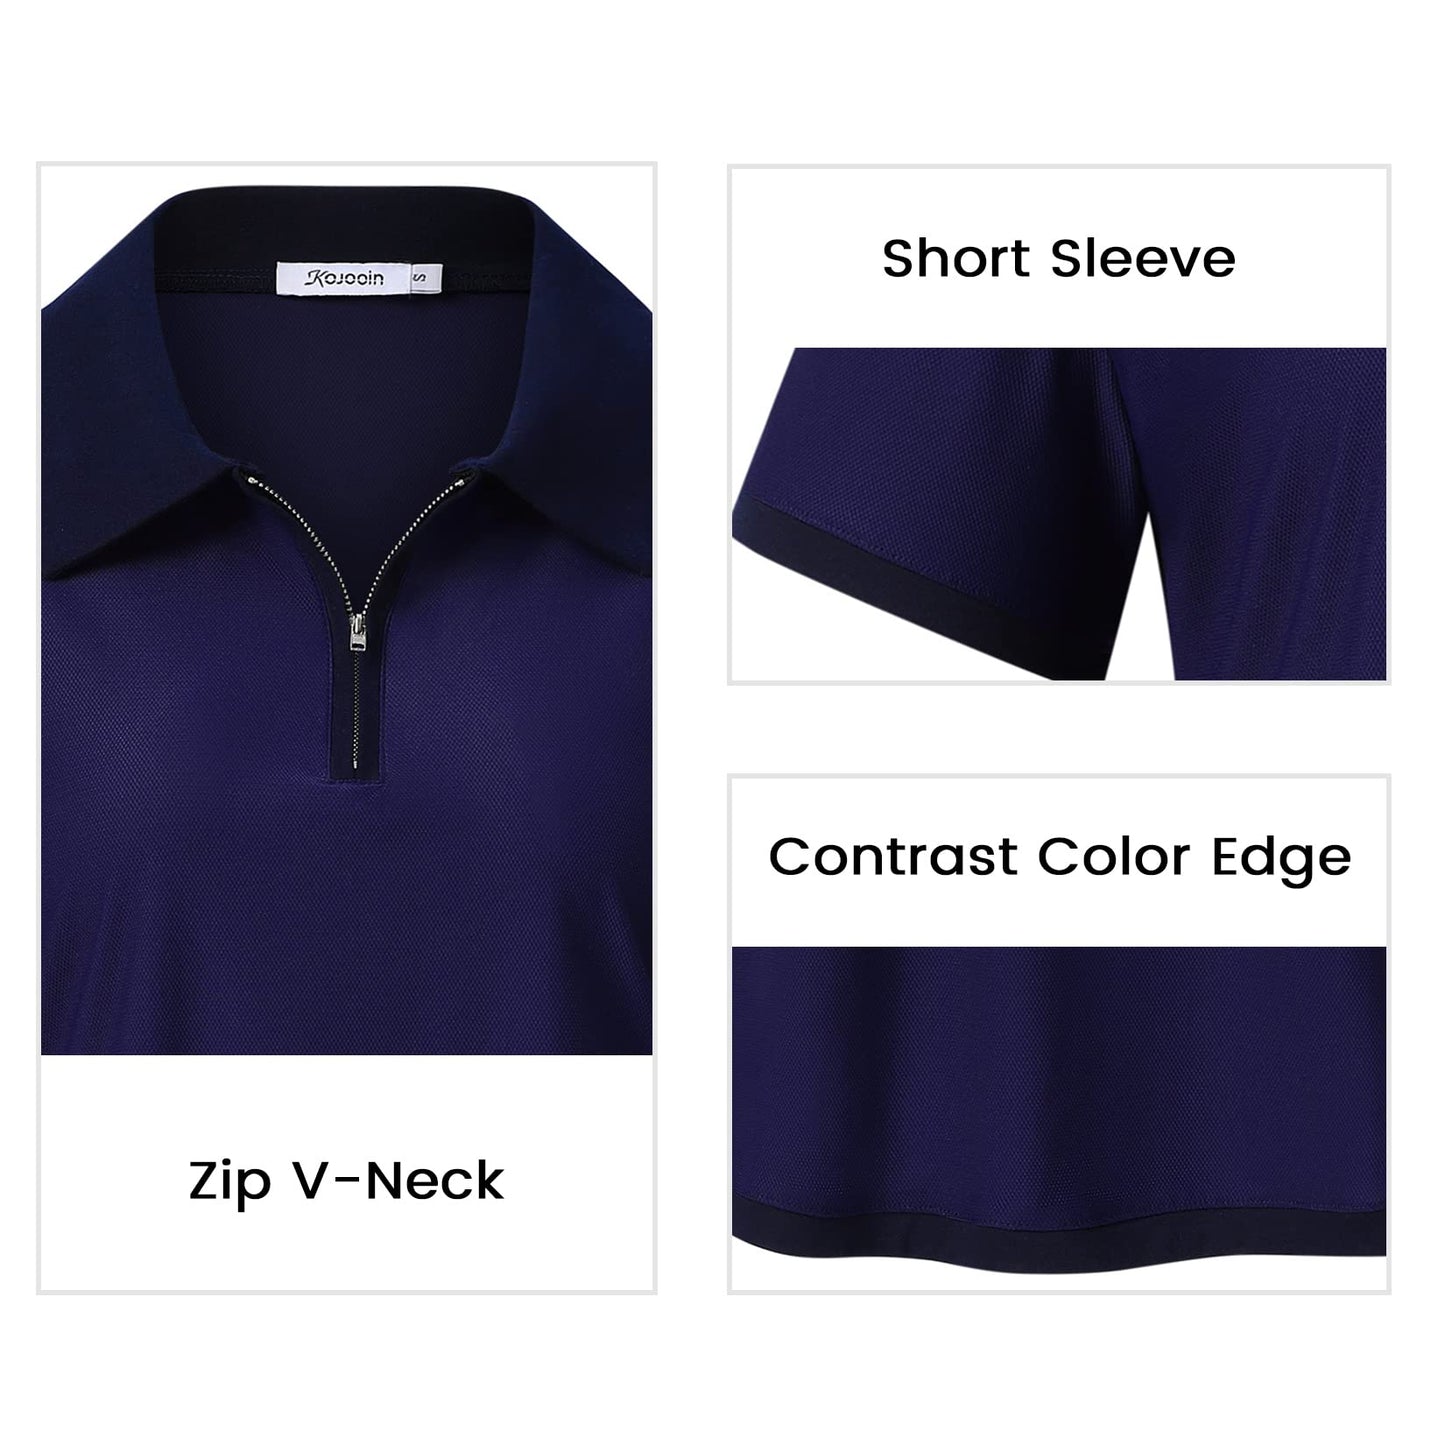 YESFASHION Polo Shirts for Women Golf Tops Blue